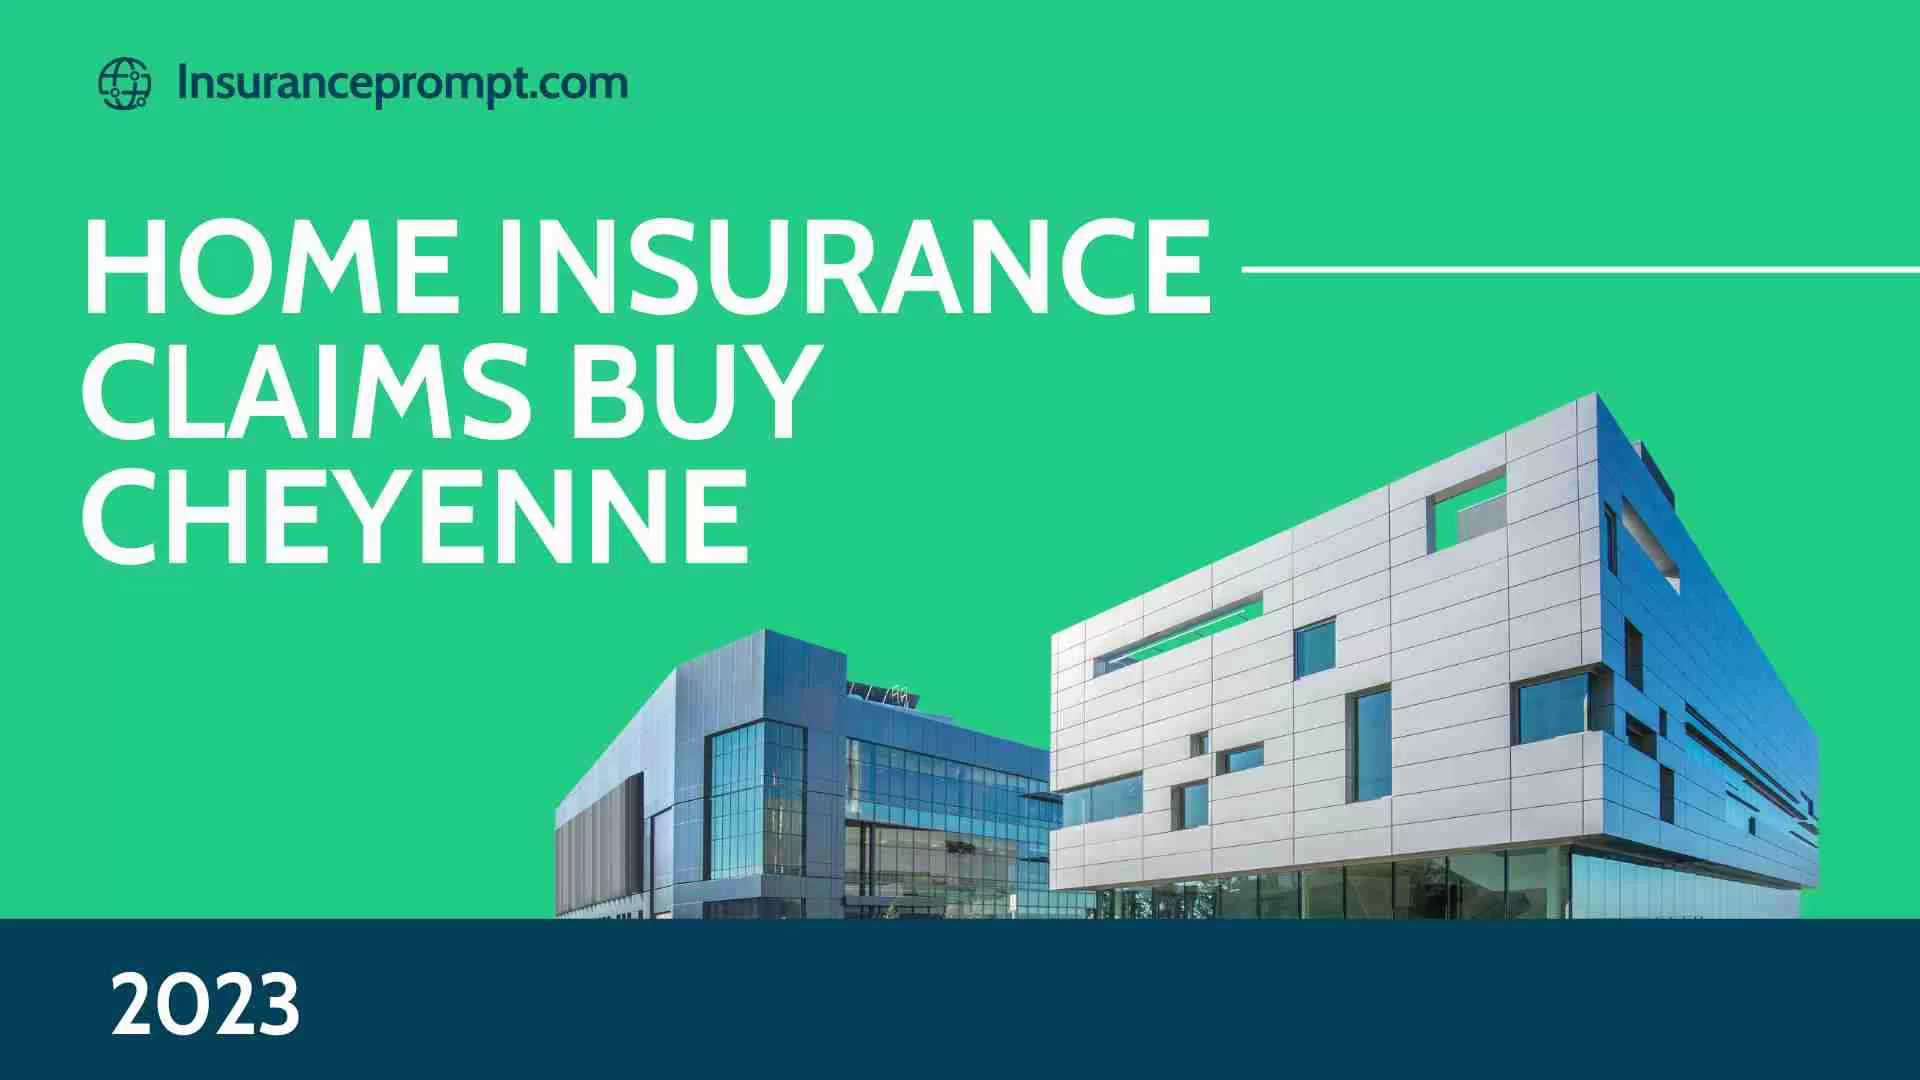 Home insurance claims buy Cheyenne